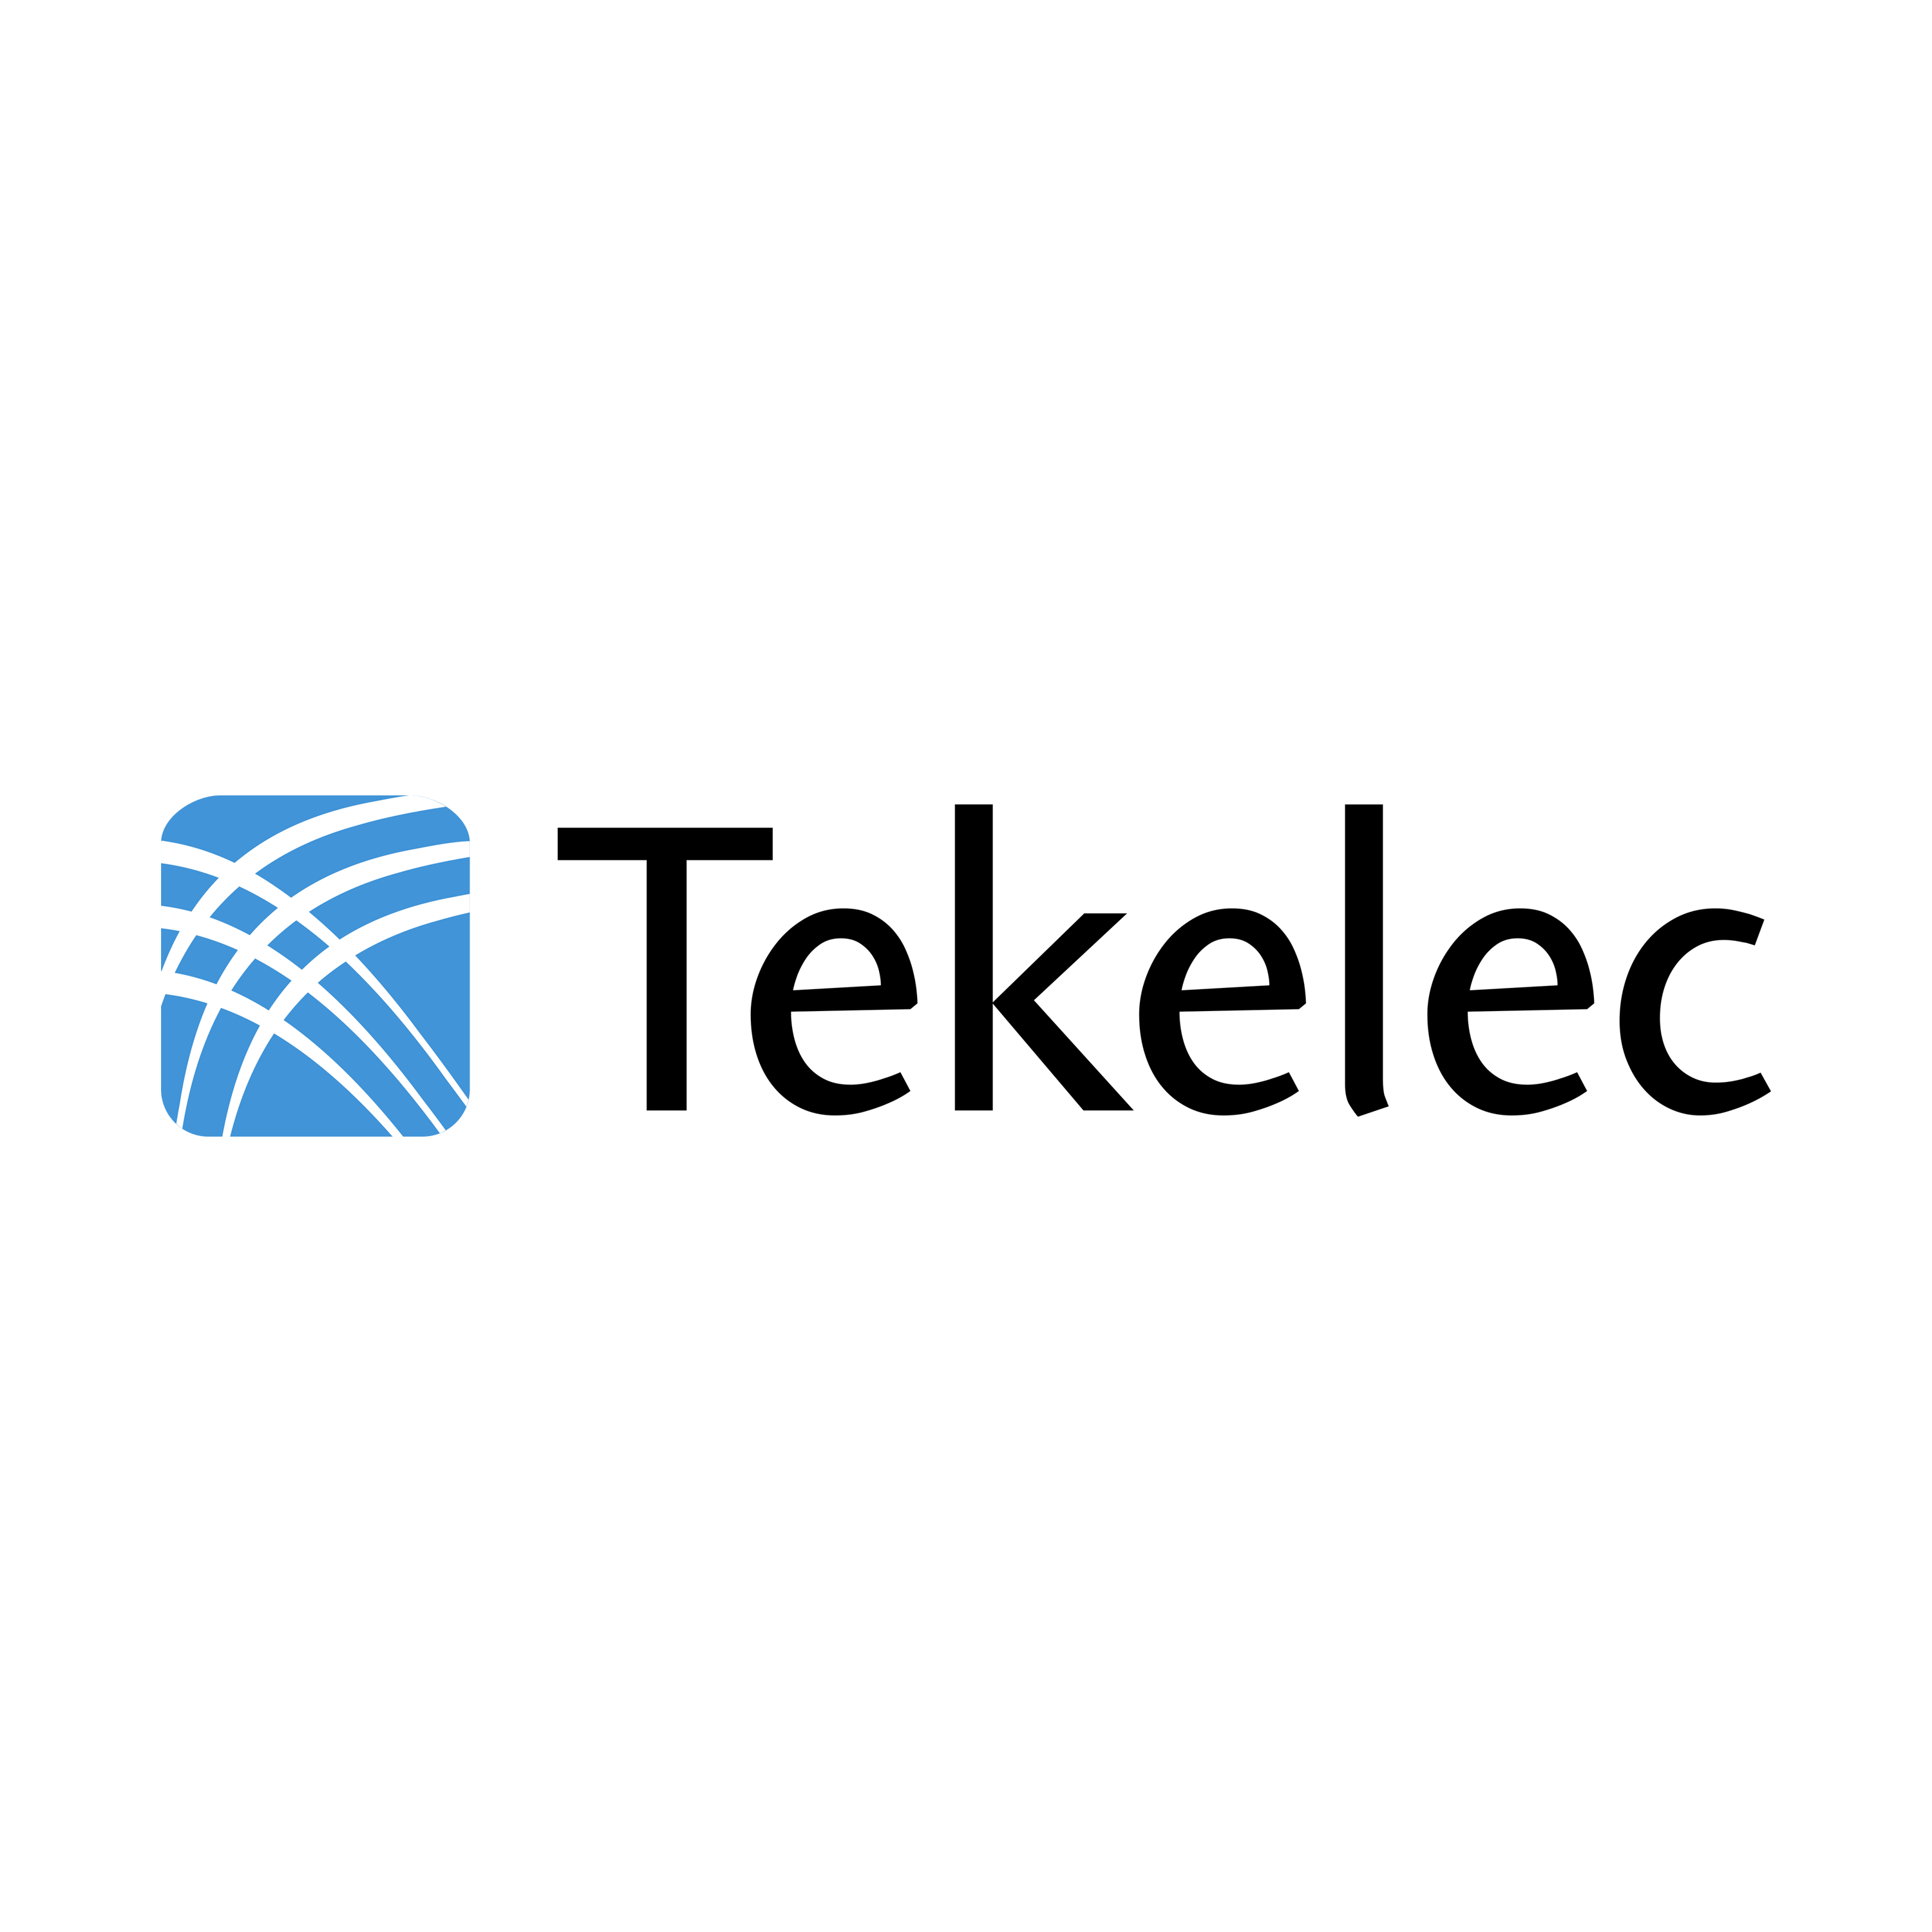 Tekelec Logo 2010 Transparent Photo